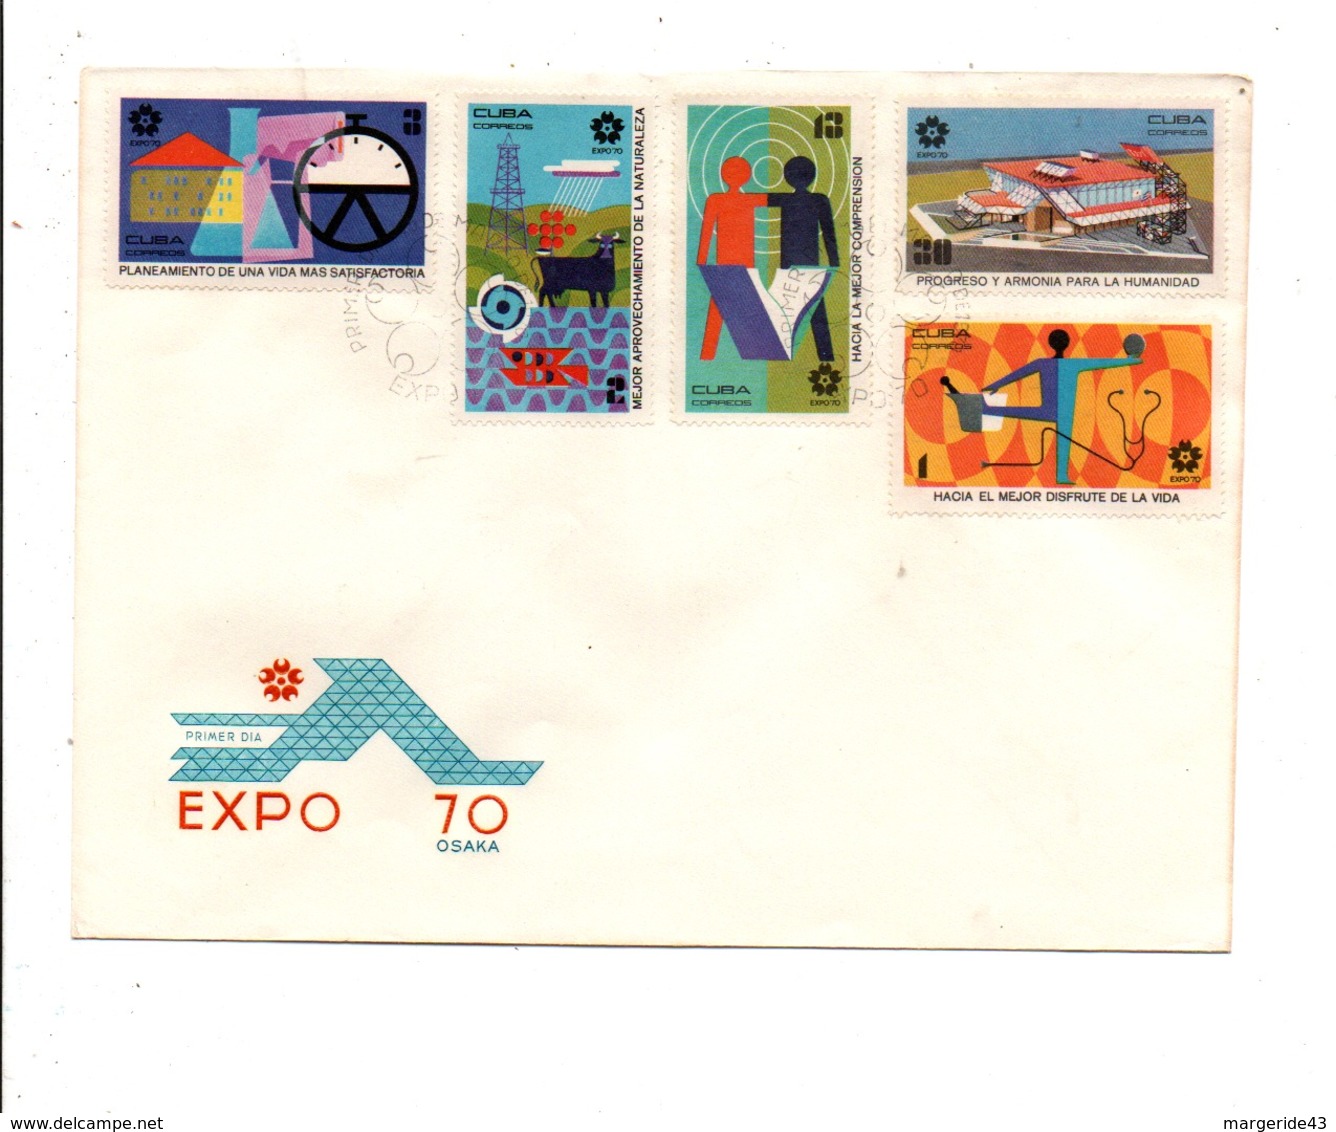 CUBA FDC 1970 EXPO OSAKA - FDC